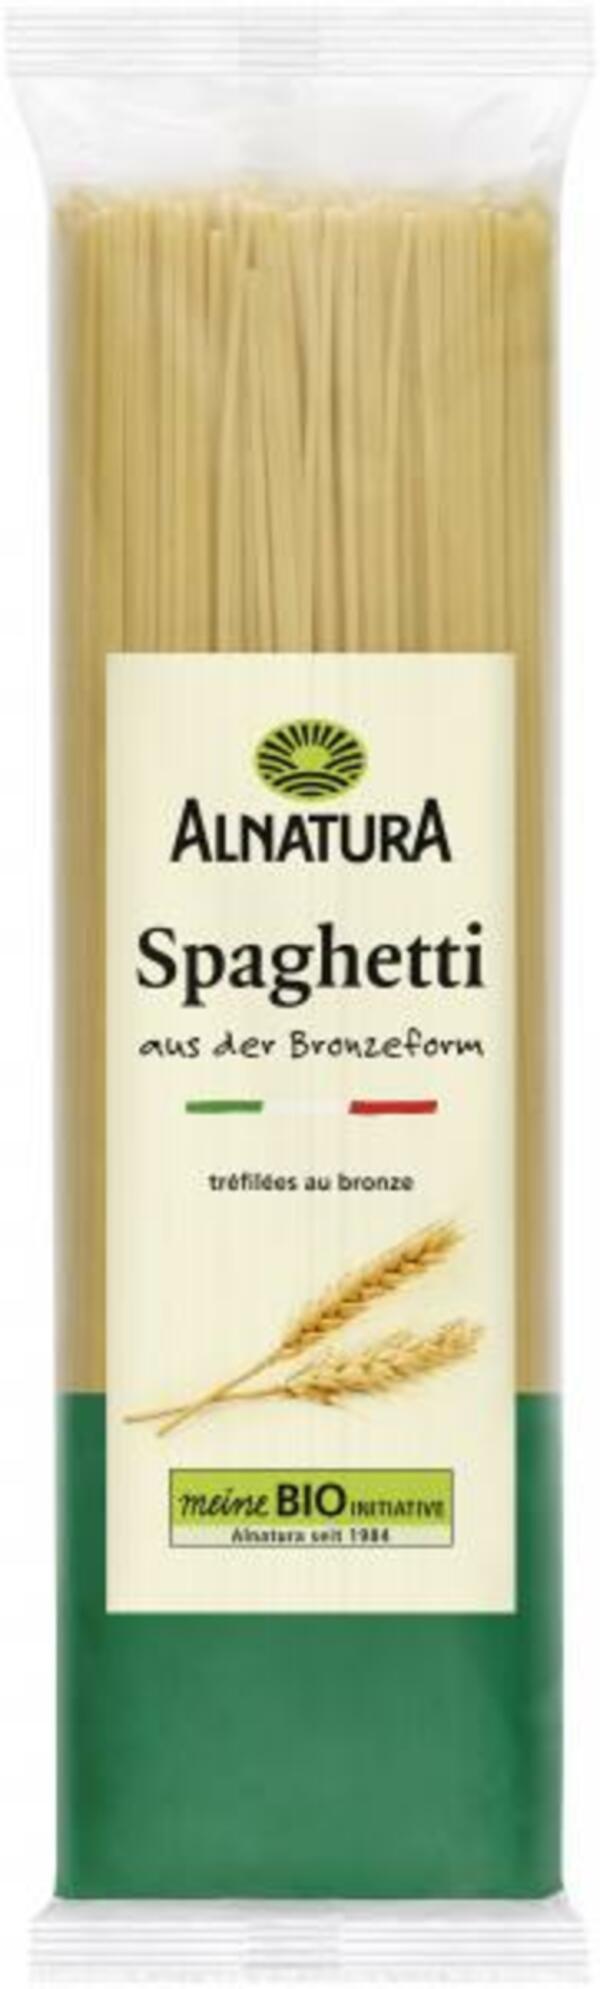 Bild 1 von Alnatura Spaghetti